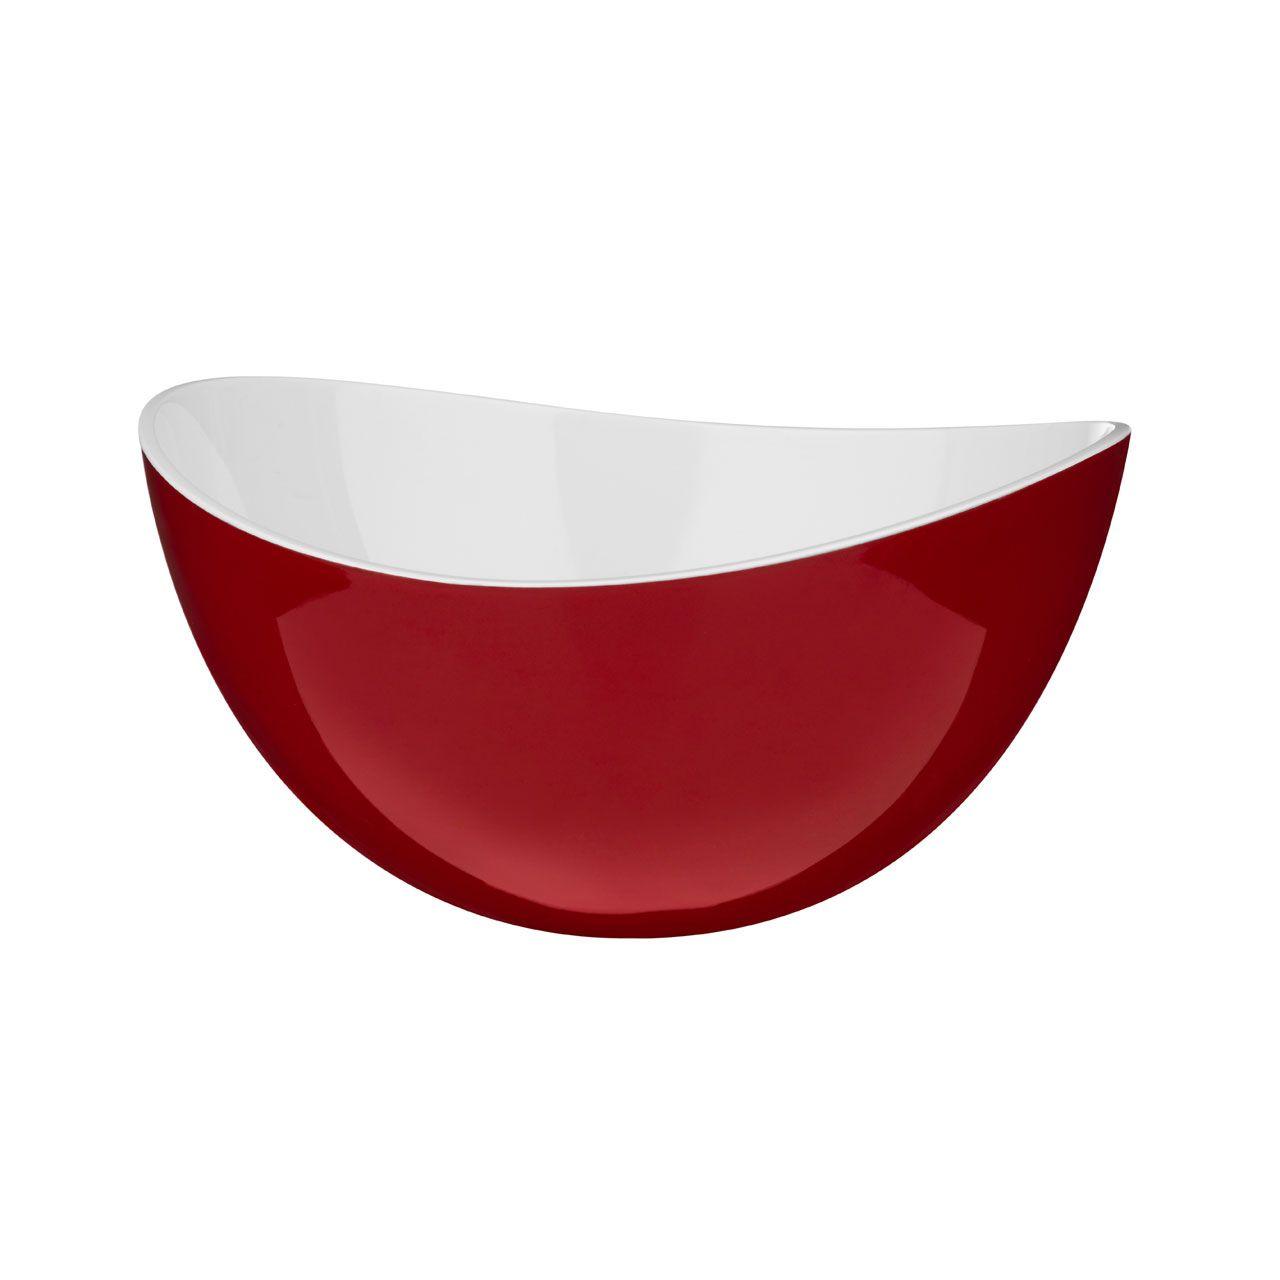 Red and White Bowl Logo - Premier Red & White Plastic Serving Bowl Kitchen Salad Fruit Dish